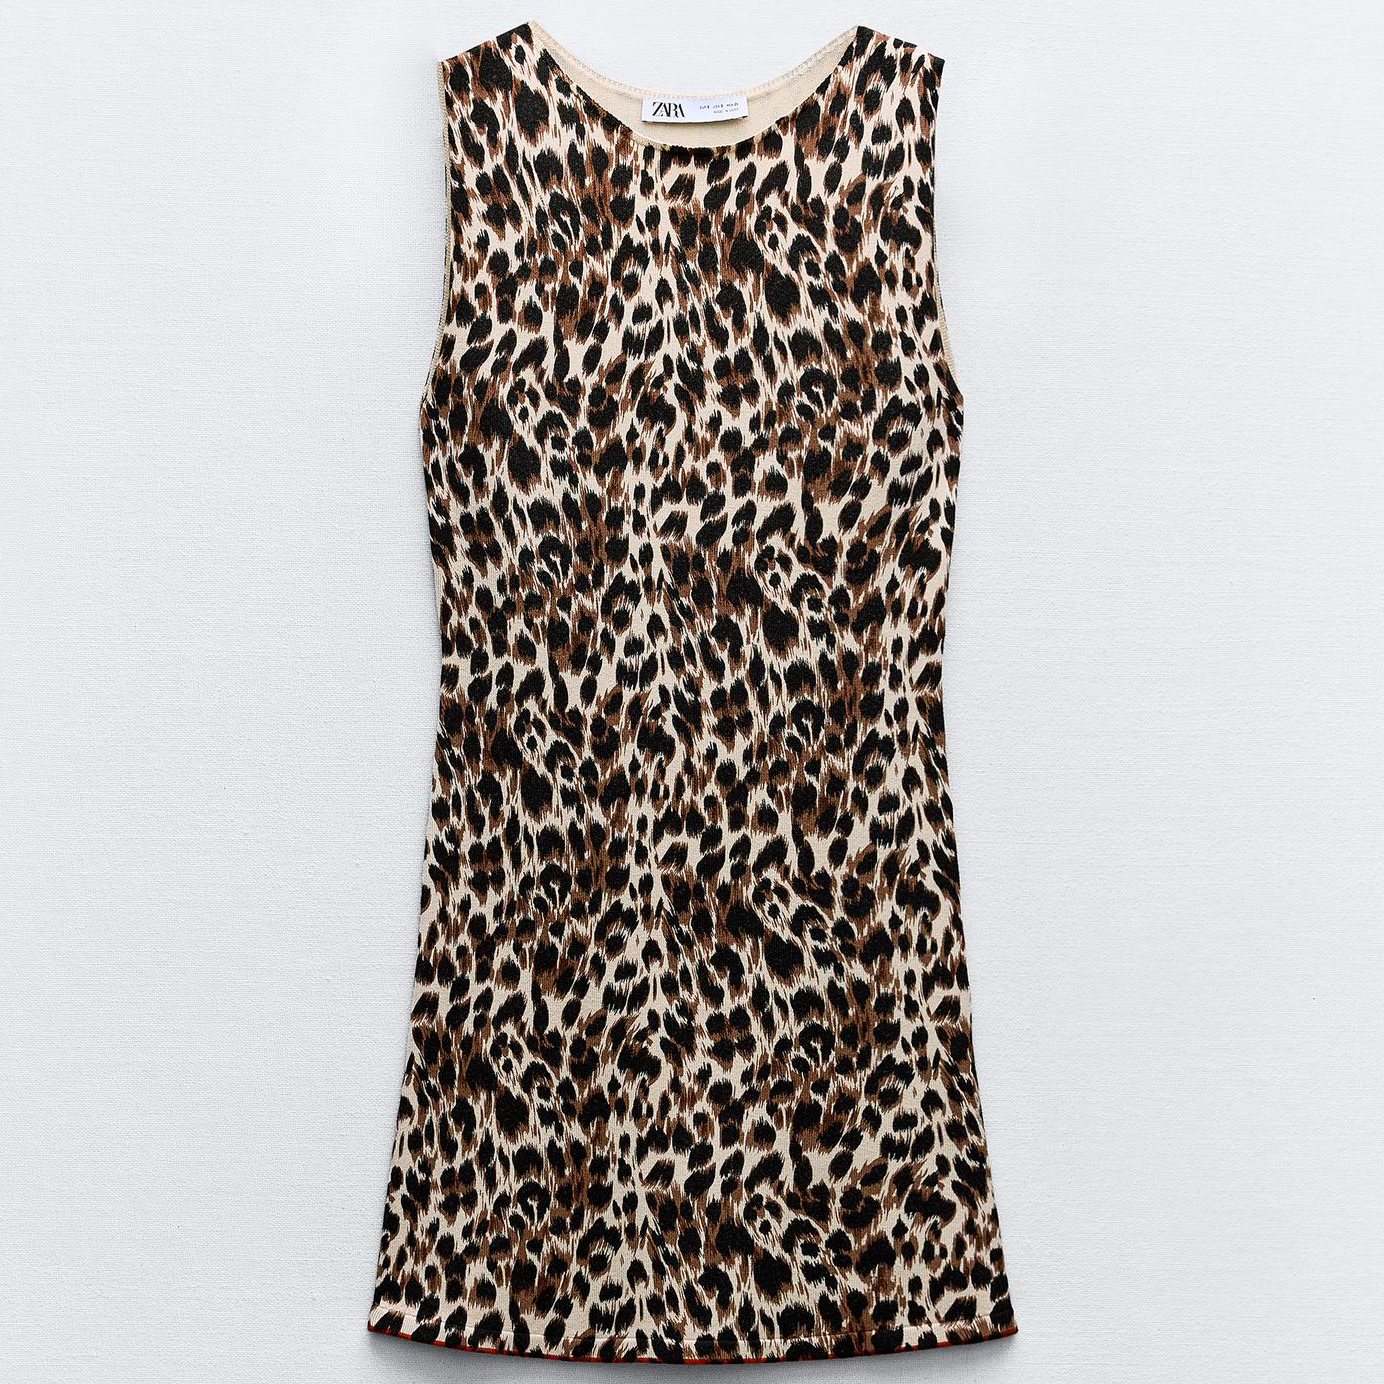 Платье Zara Animal Print Knit, коричневый/мультиколор